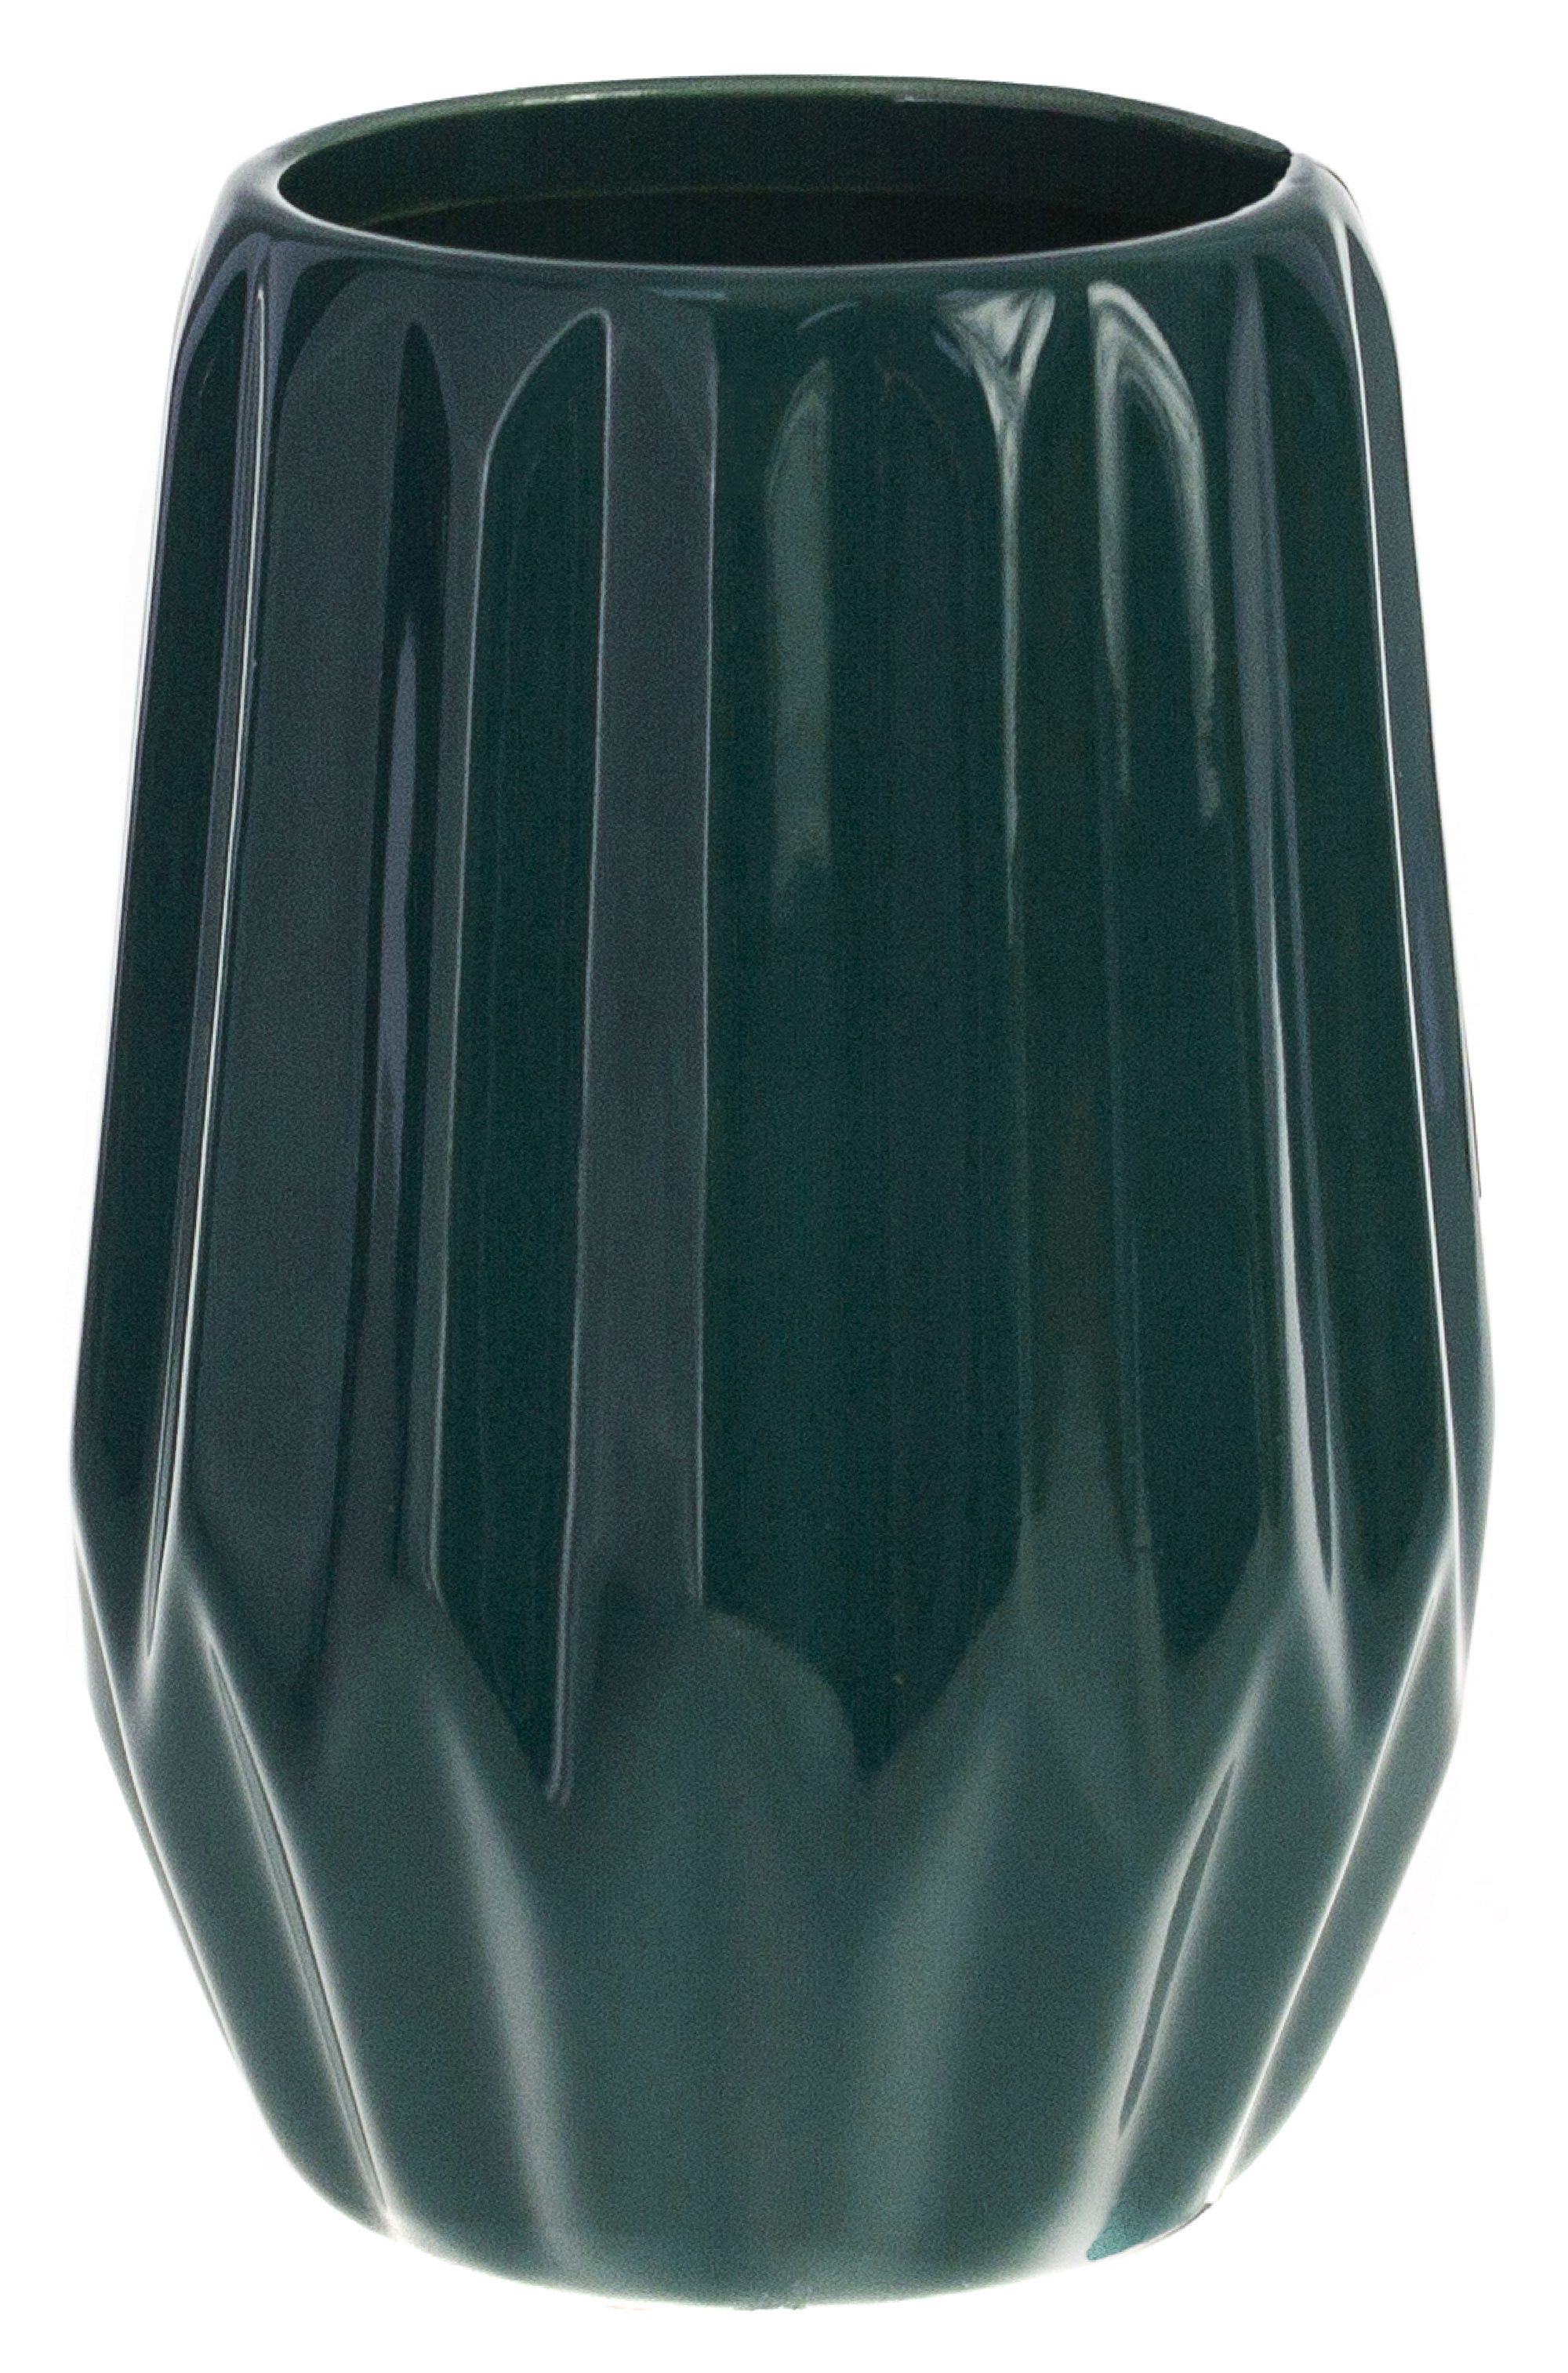 82369126 Стакан для зубныx щеток керамика изумрудный Emerald STLM-0025648 PROFFI HOME